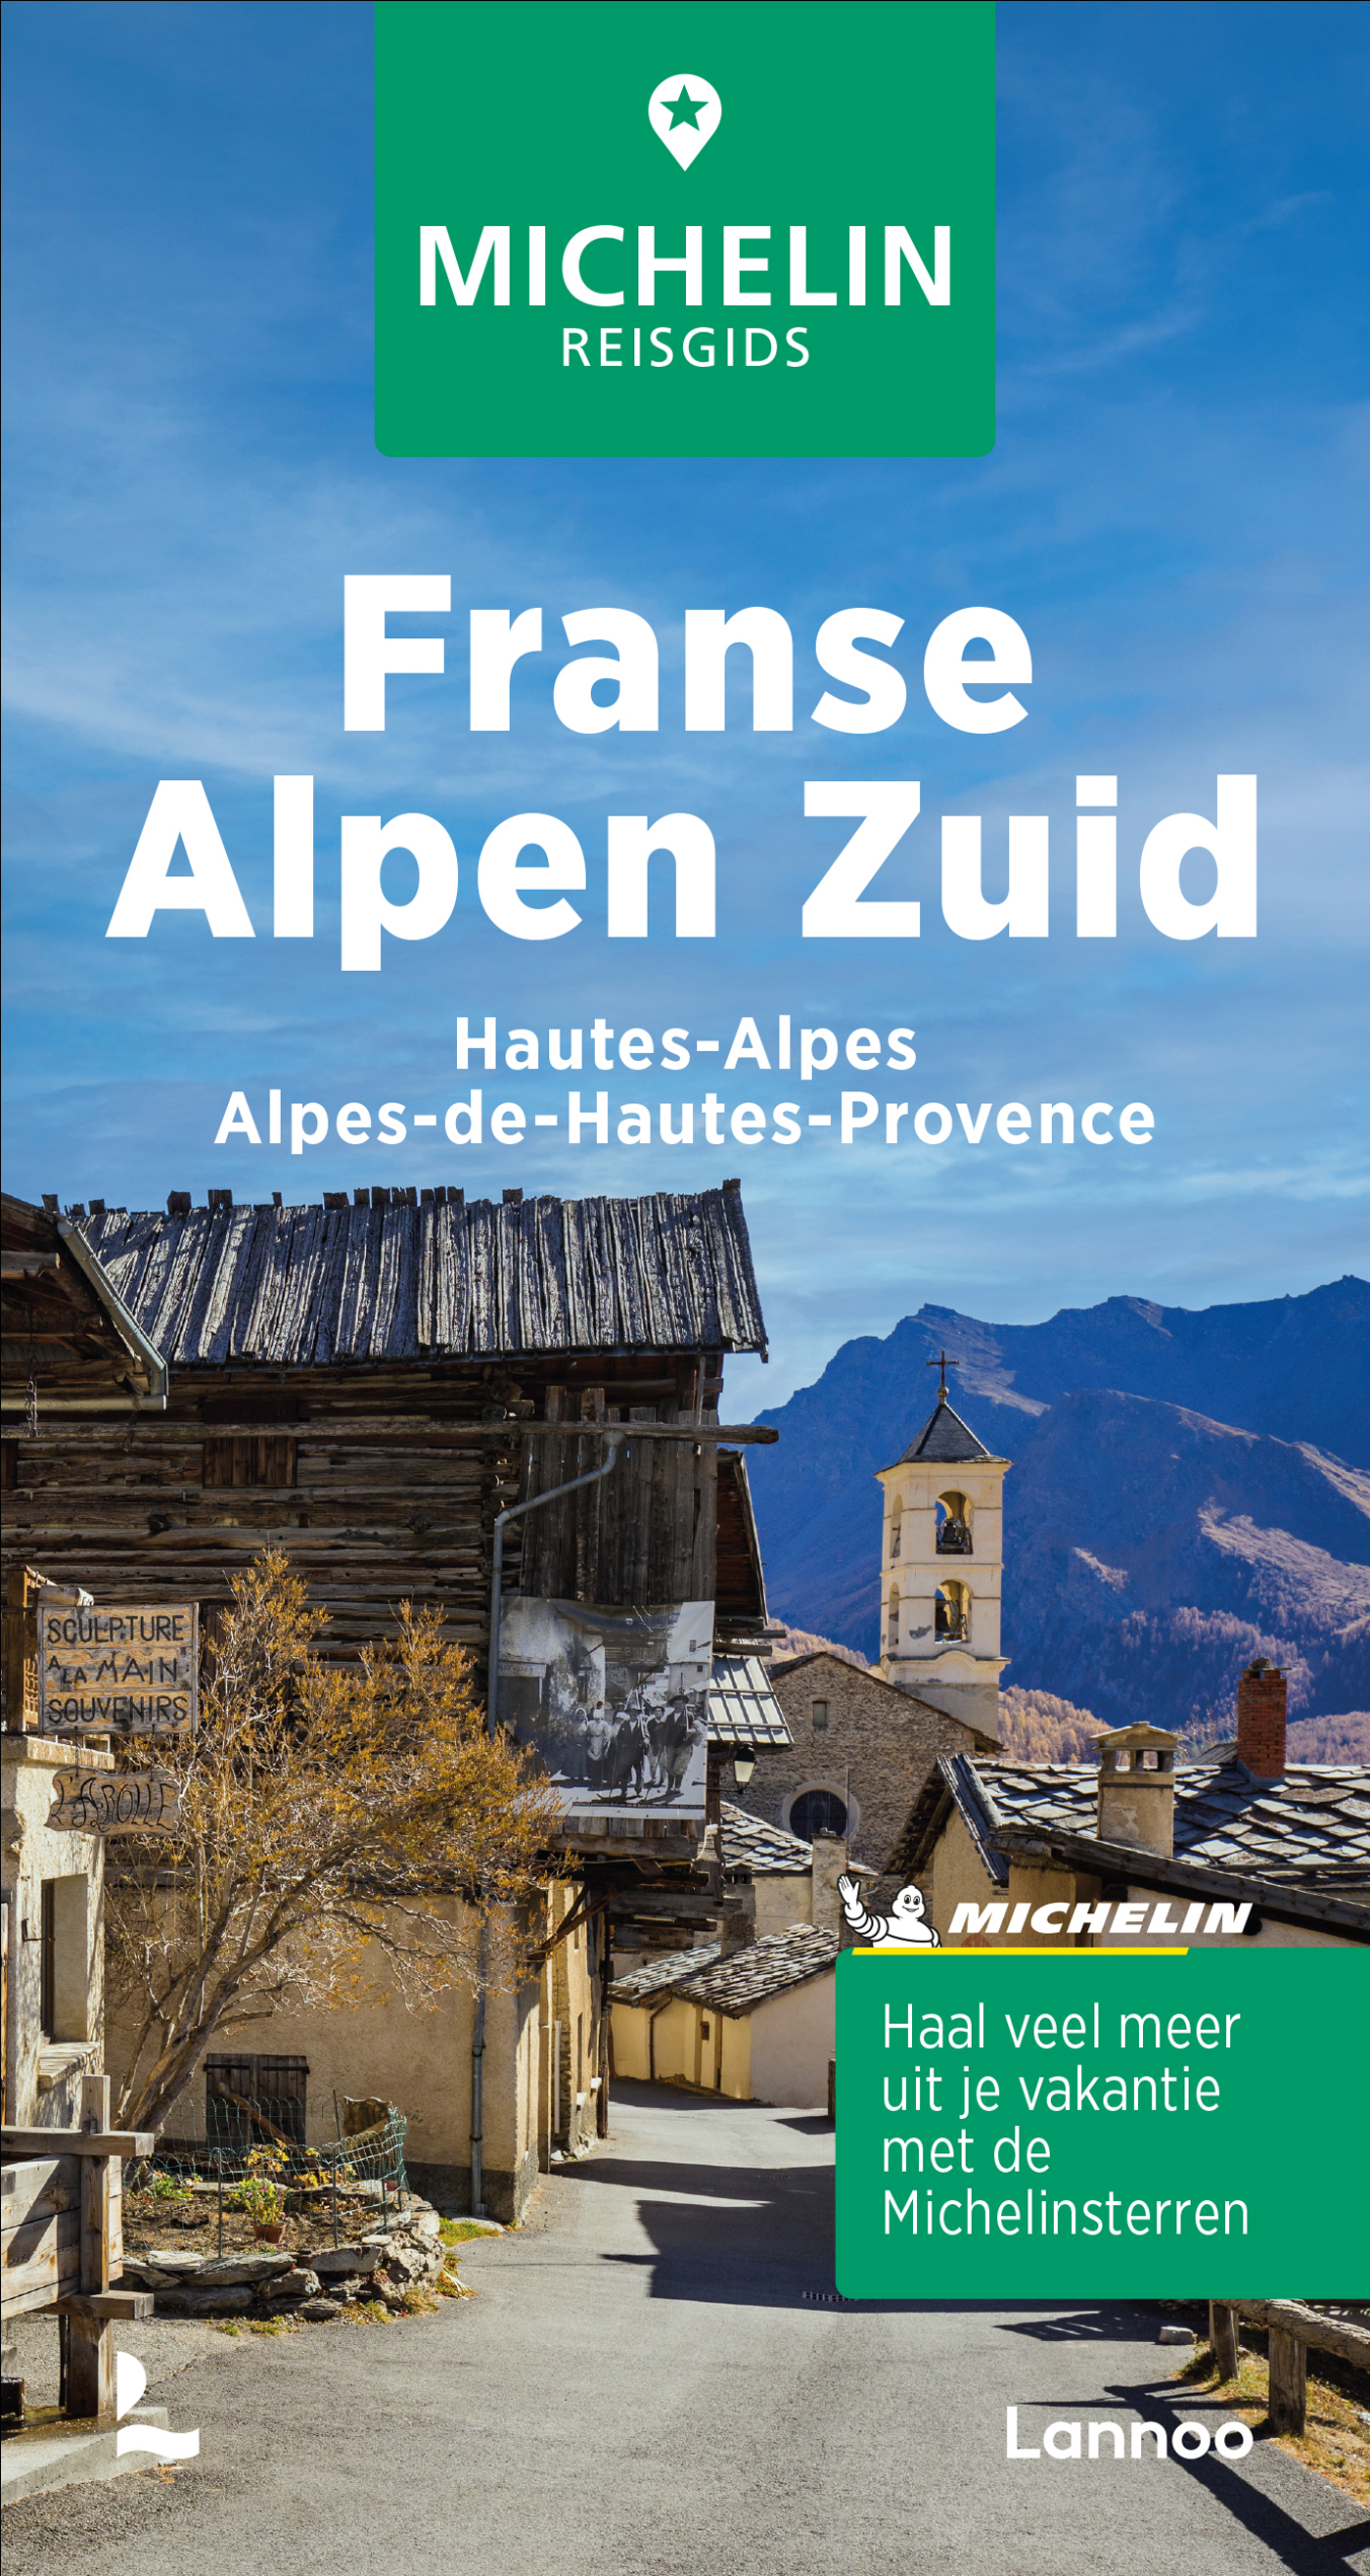 Online bestellen: Reisgids Michelin groene gids Franse Alpen Zuid | Lannoo